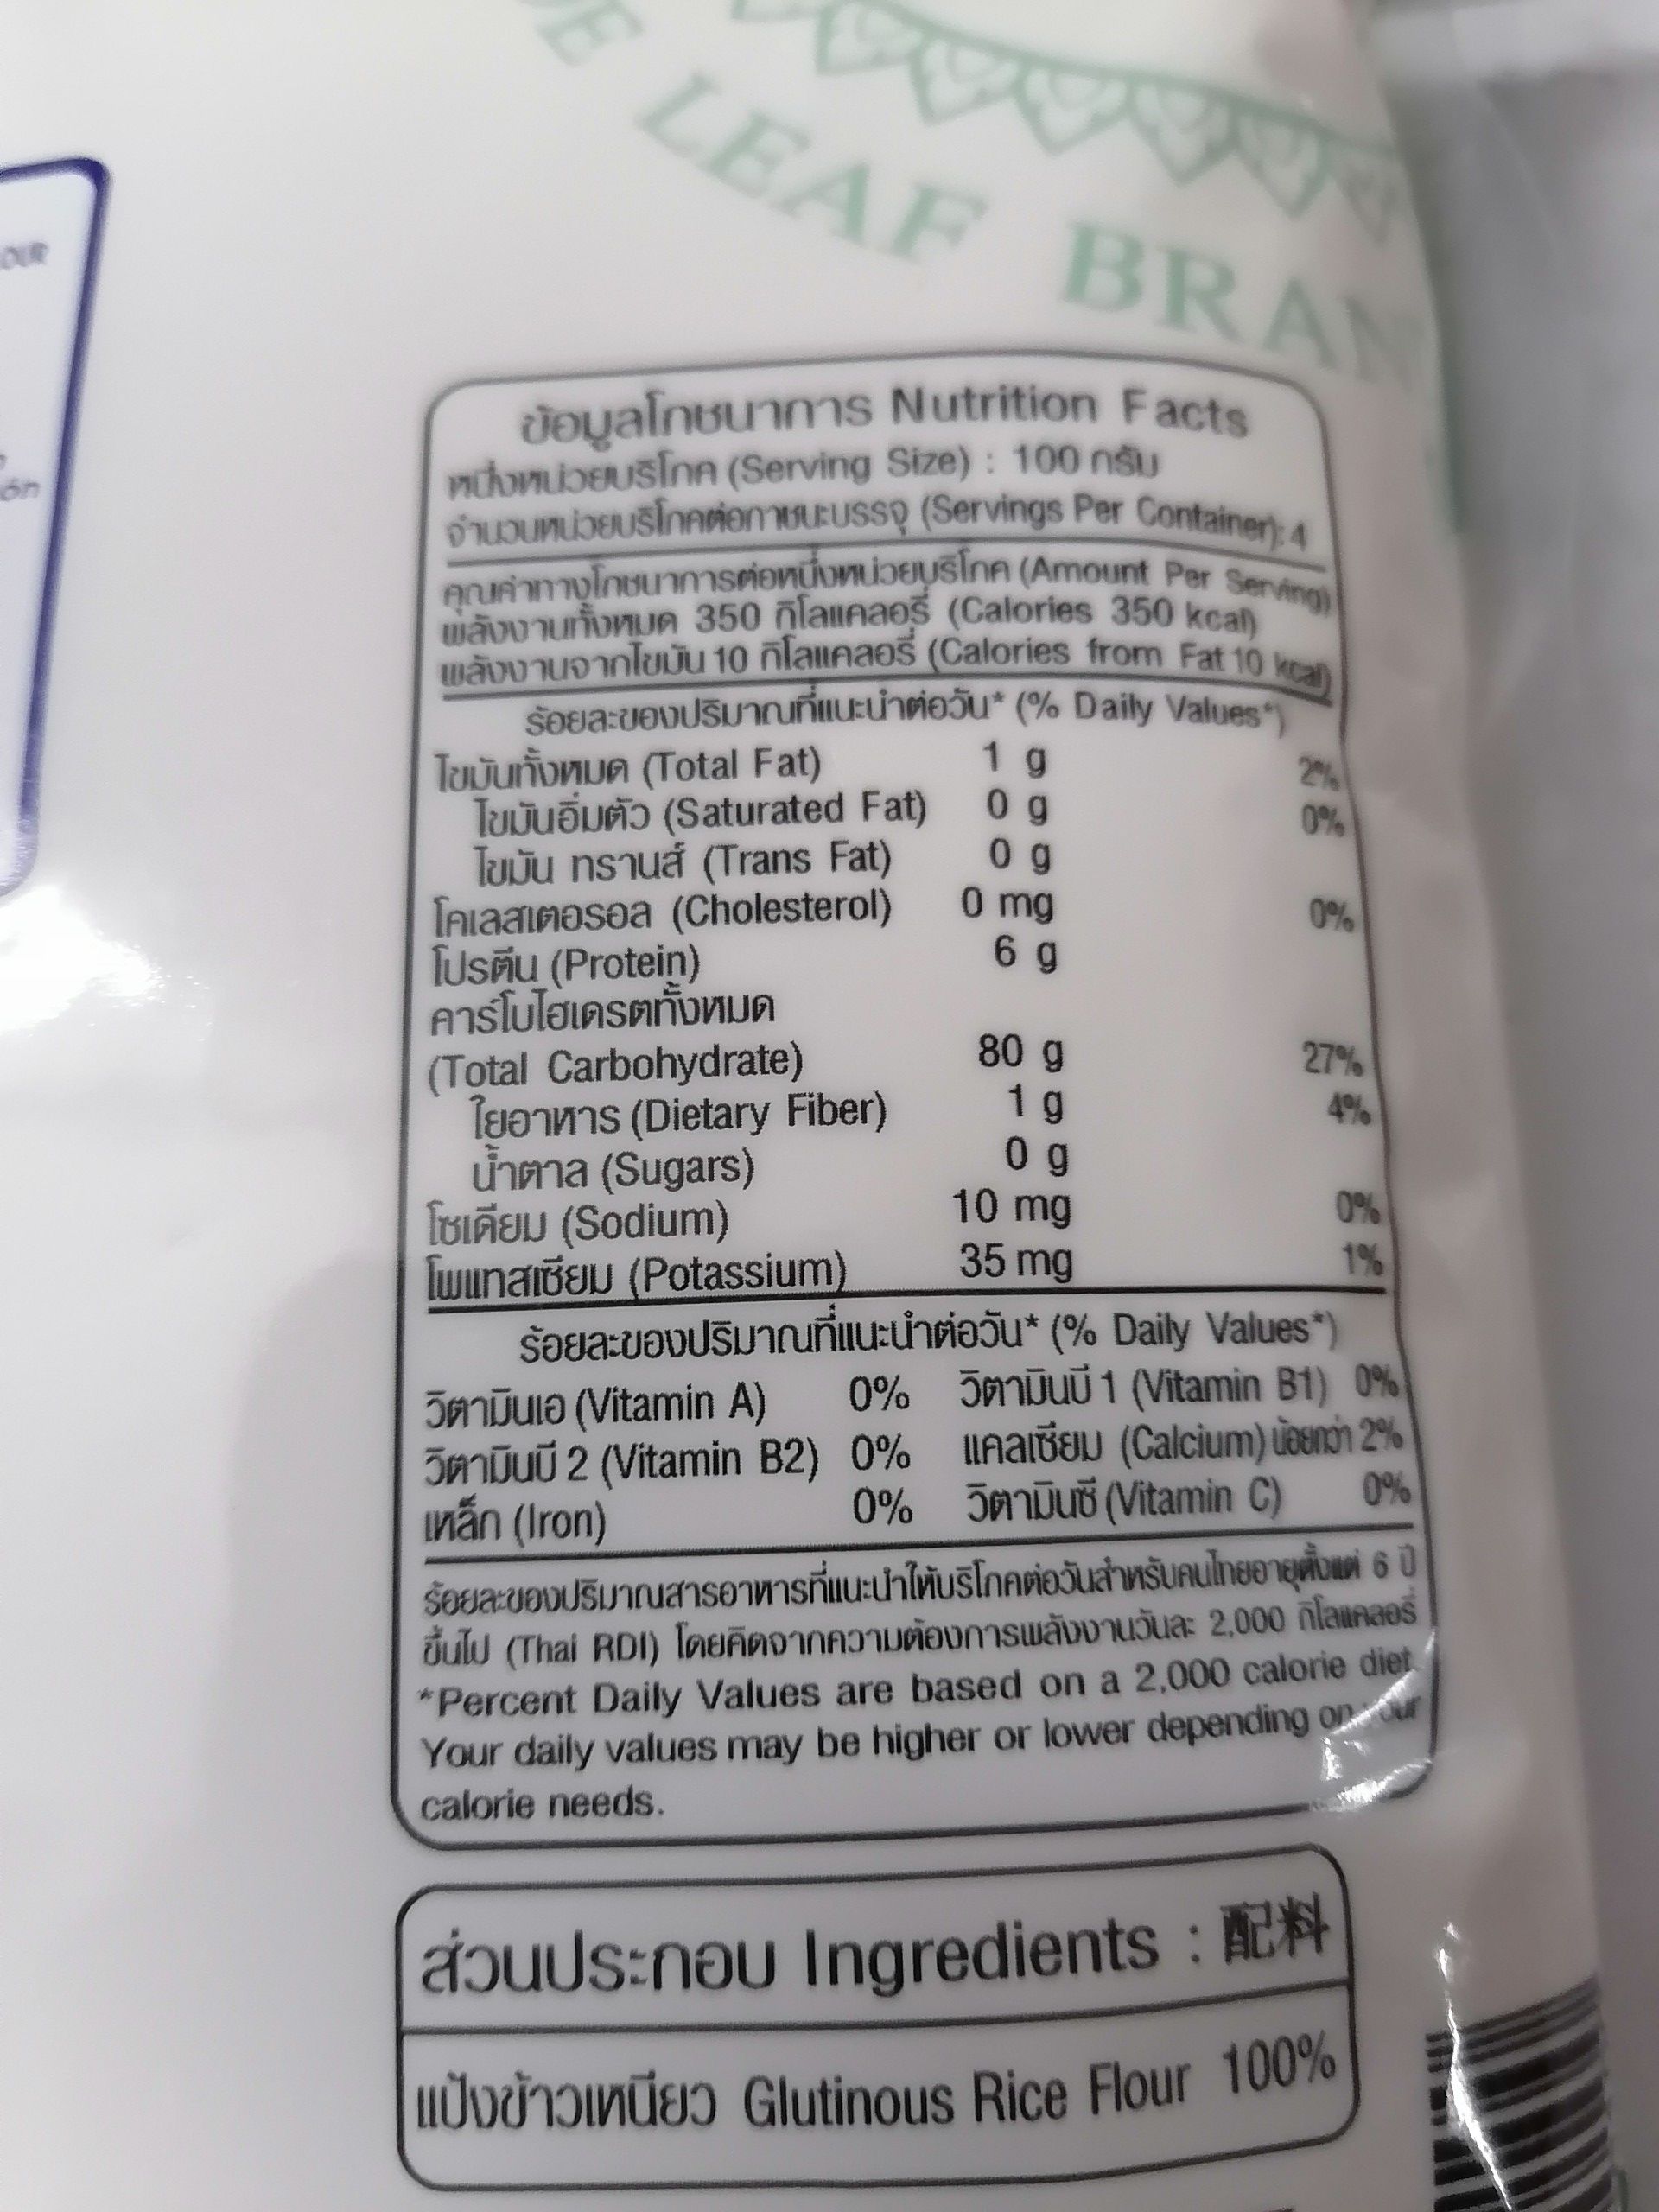 [400g] TINH BỘT GẠO NẾP [Thailand] JADE LEAF Finest Glutinous Rice Flour (halal) (vvk-hk)